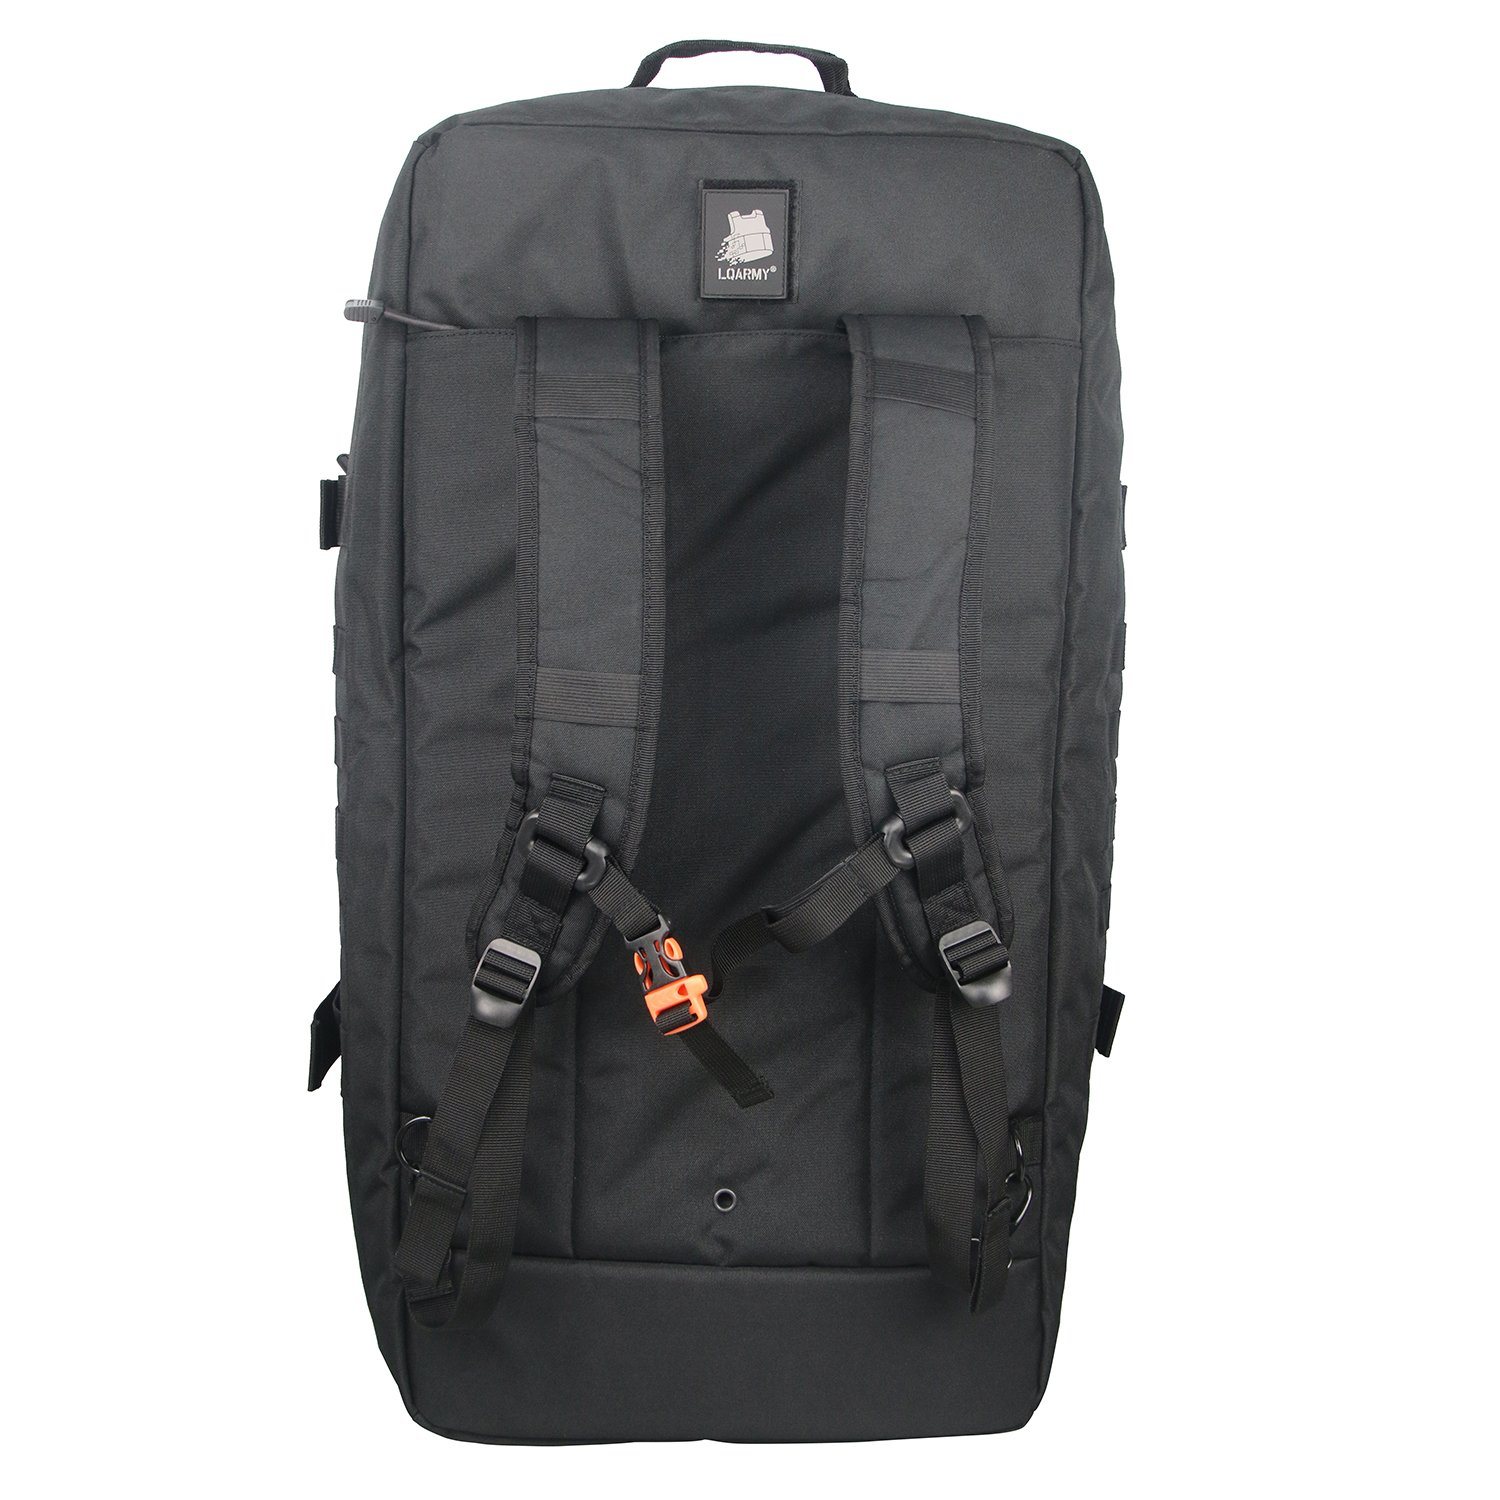 New Arrival Custom Outdoor Tactical Duffle Bags Travel Bag